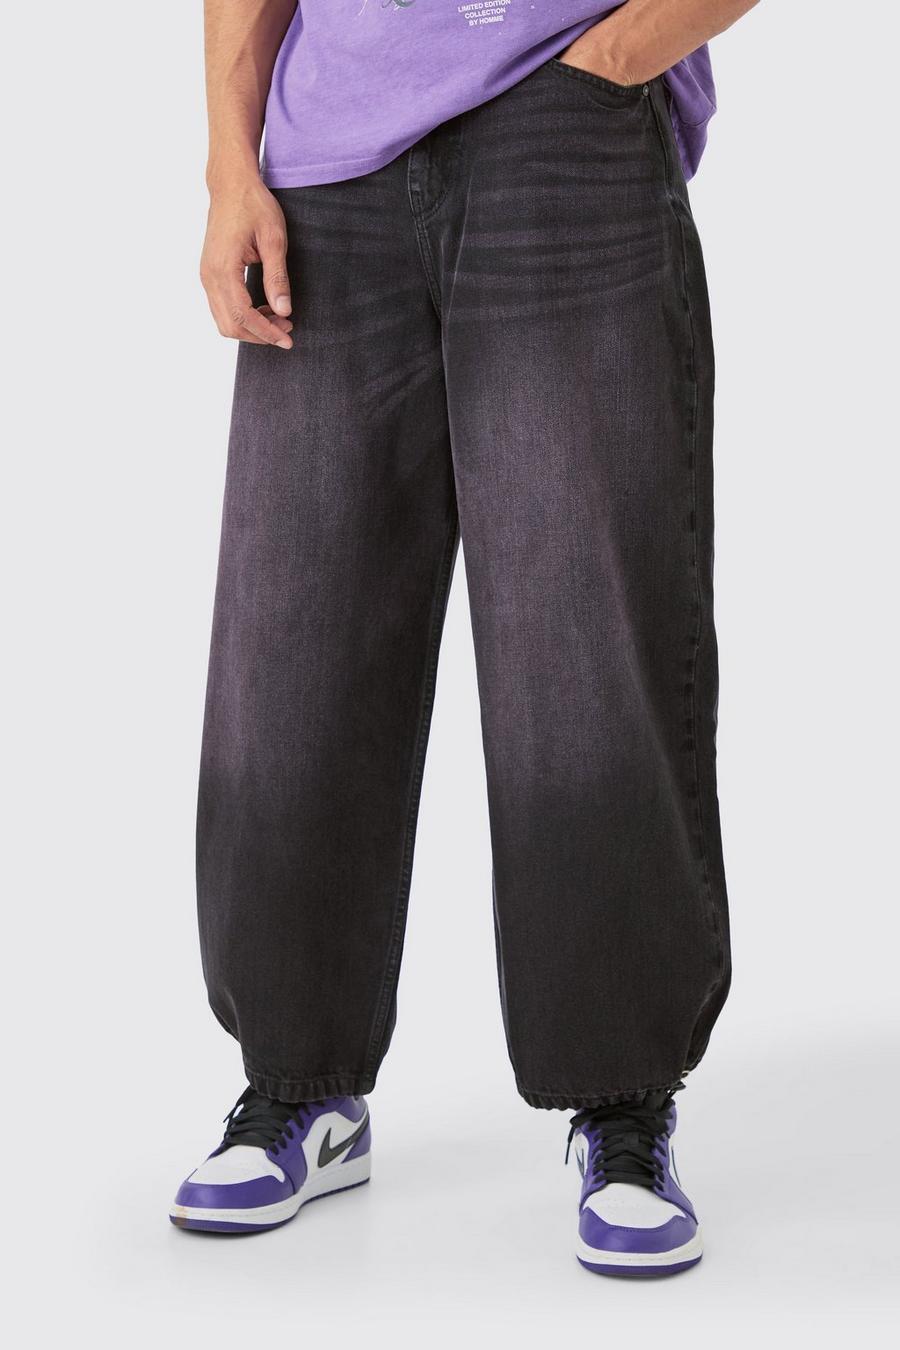 Jeans Parachute in denim nero in tinta viola, Purple